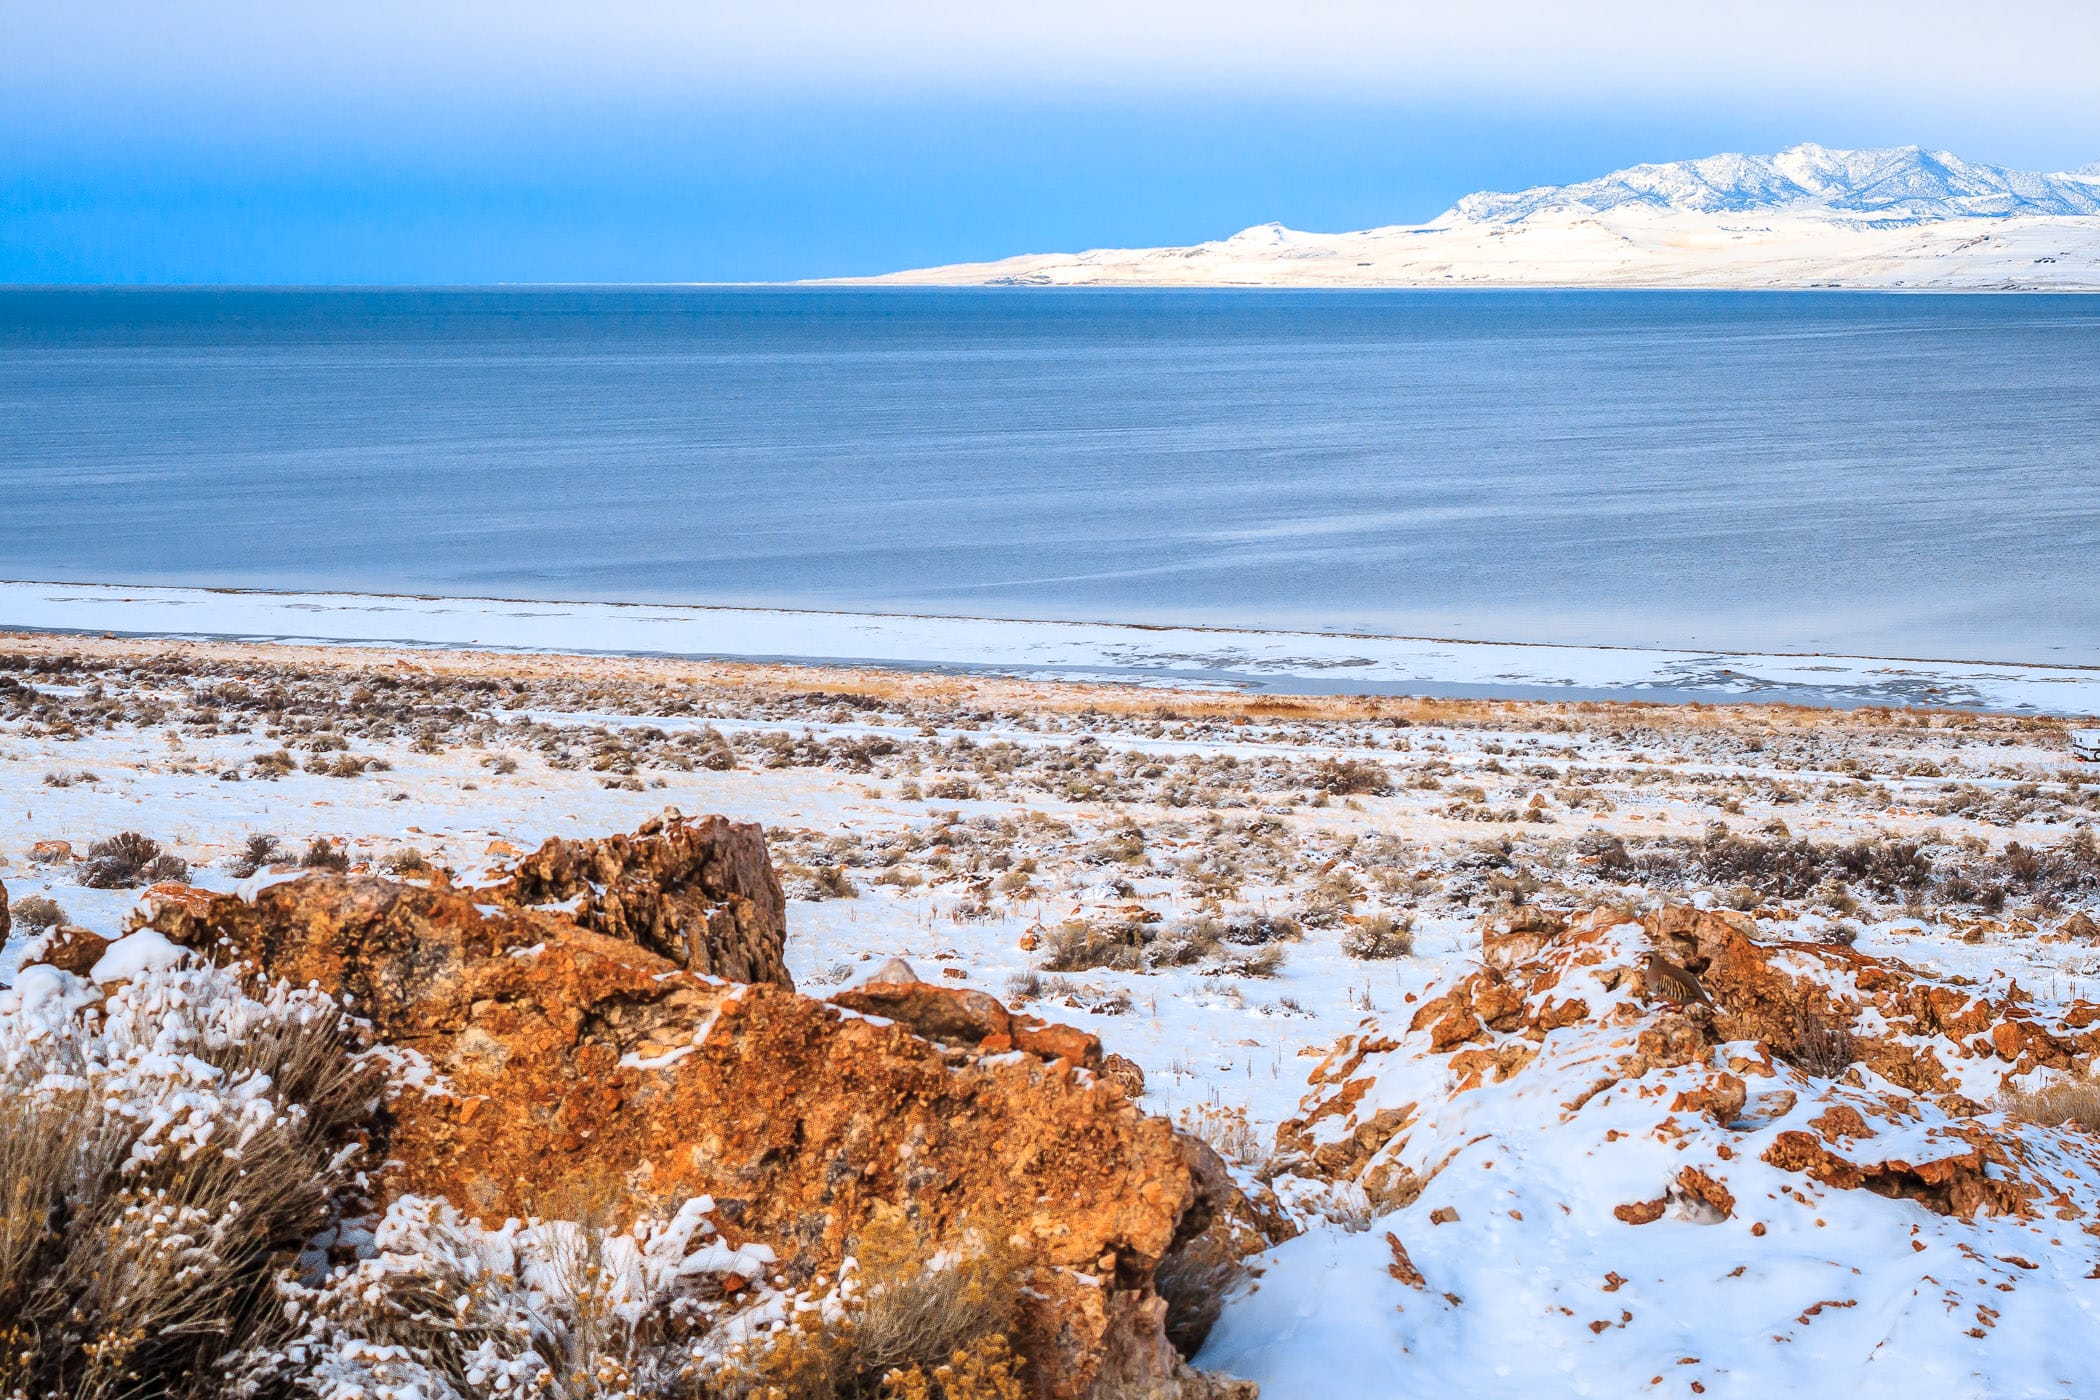 The brush and rock covered winter shoreline of Antelope Island in Utah's Great Salt Lake.